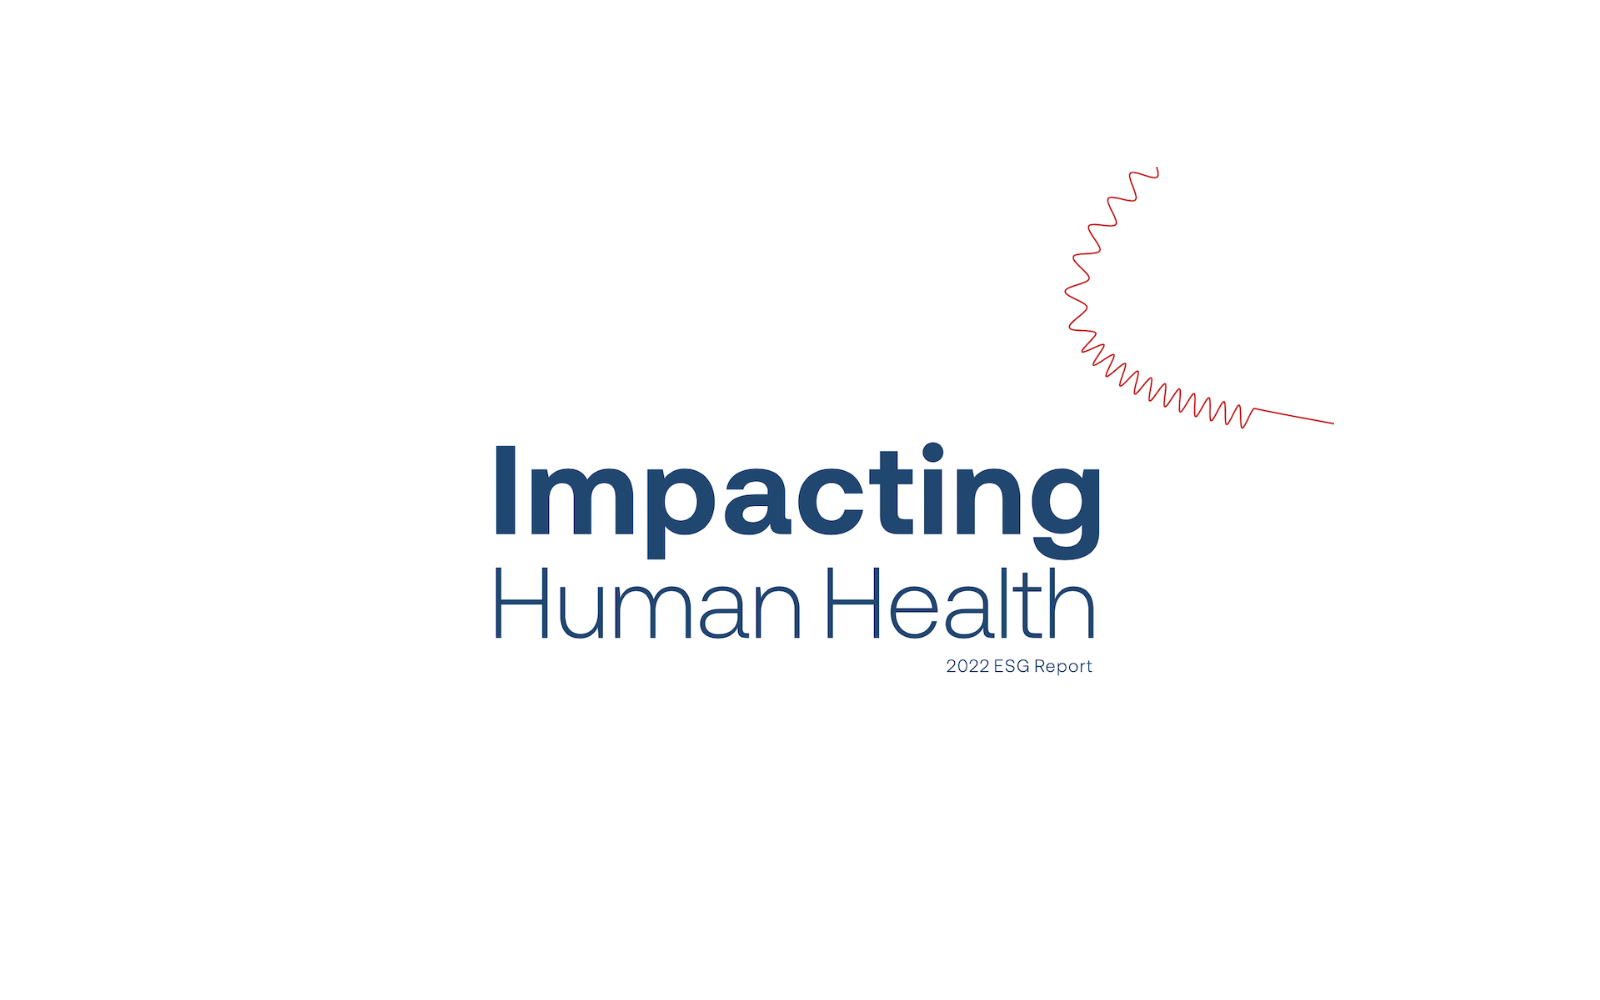  Impacting Human Health: Reflecting on our ESG Progress 